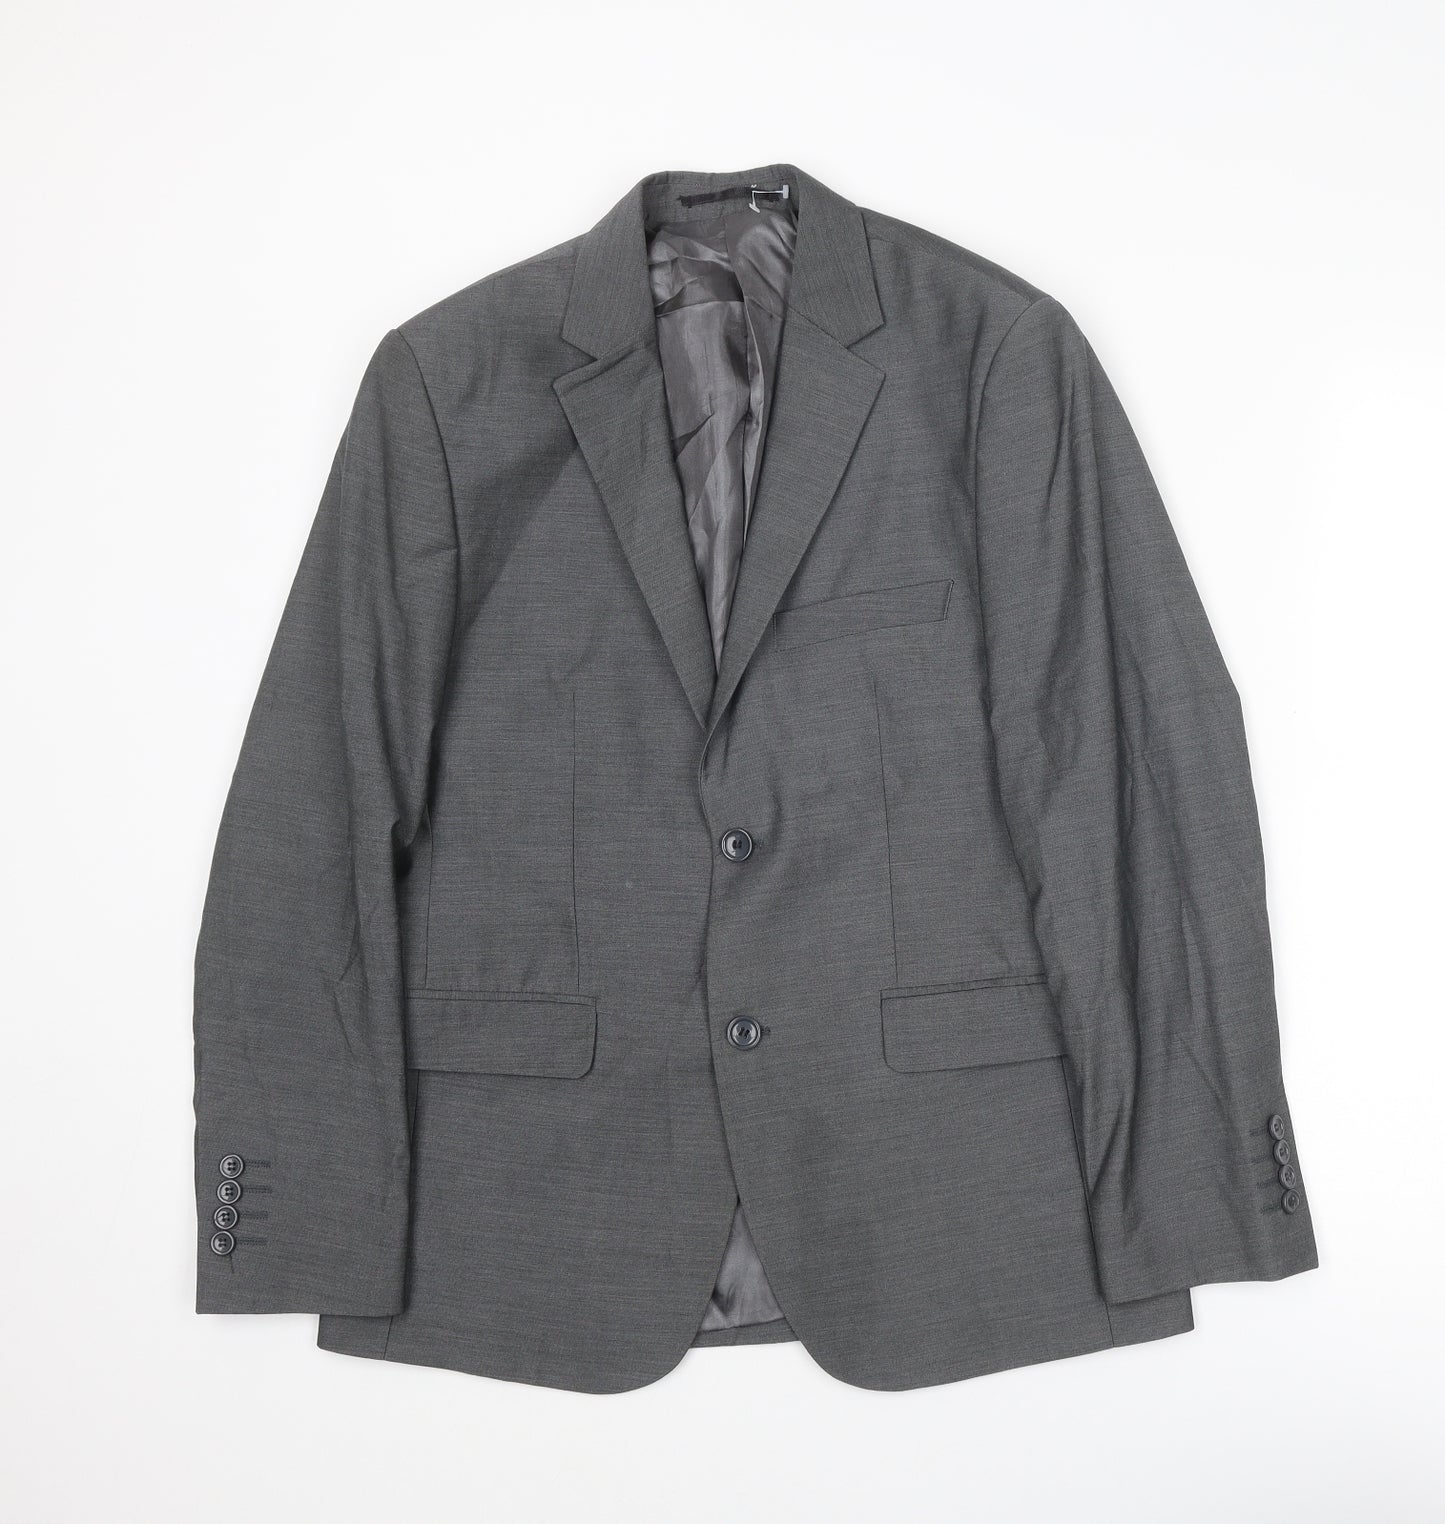 FRENCHEYE Mens Grey Wool Jacket Suit Jacket Size 36 Regular